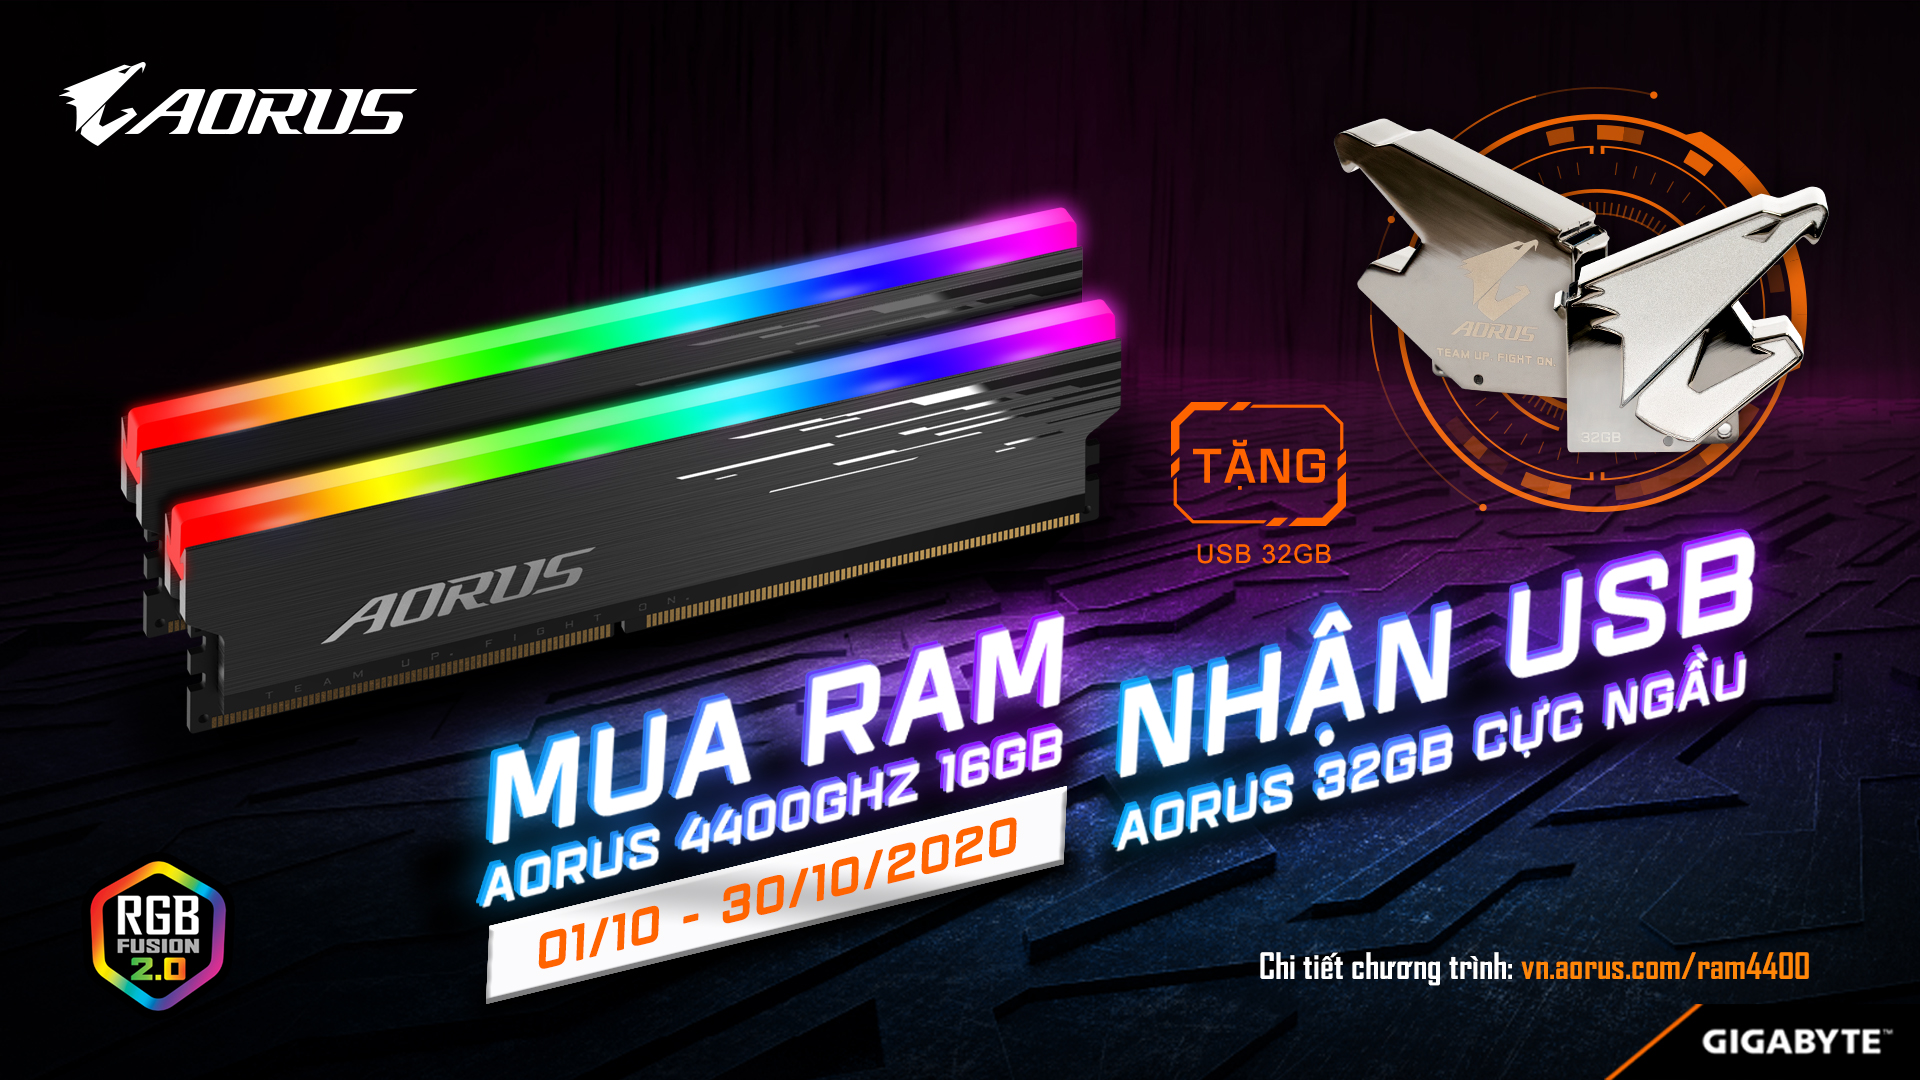 MUA RAM AORUS 4400GHz 16GB, NHẬN USB AORUS 32GB CỰC NGẦU